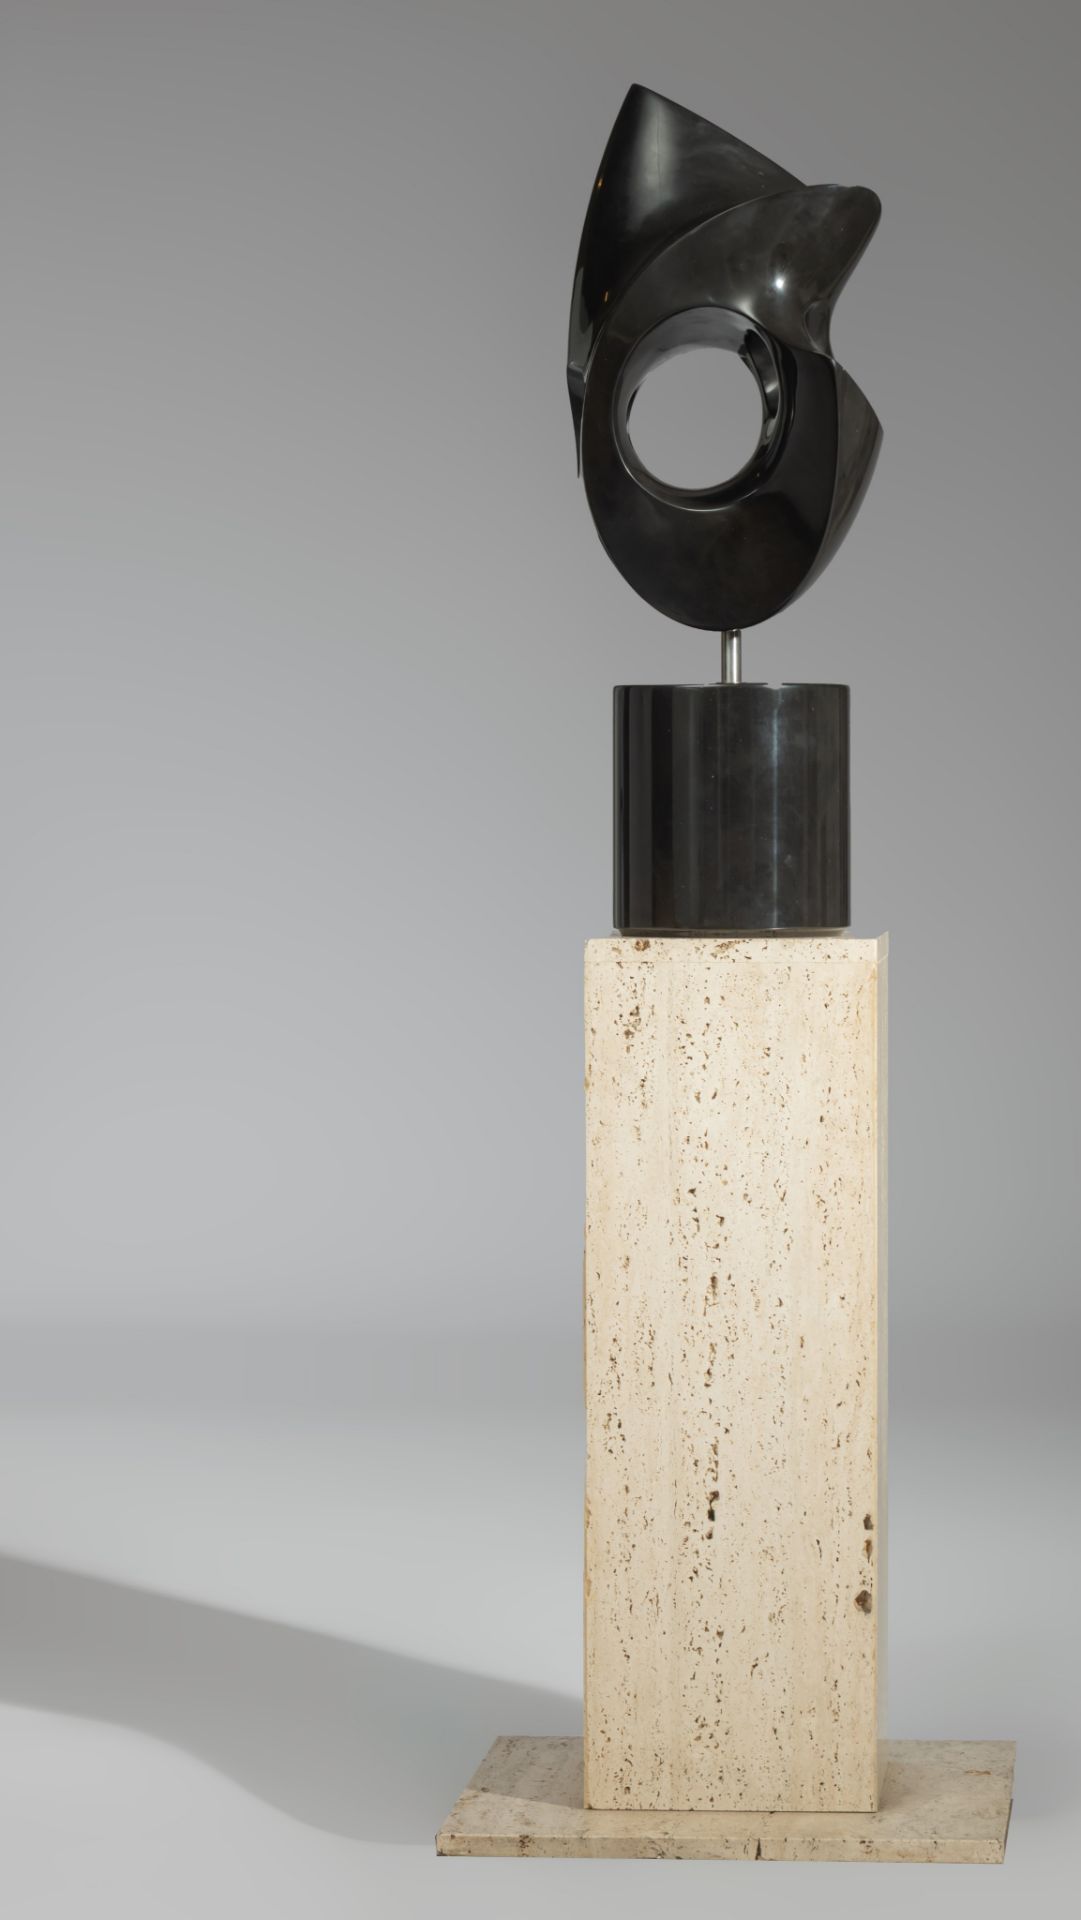 Jeanine Behaeghel (1940-1993), abstract sculpture, 1988, noir Belge marble on a travertine pedestal, - Image 14 of 18